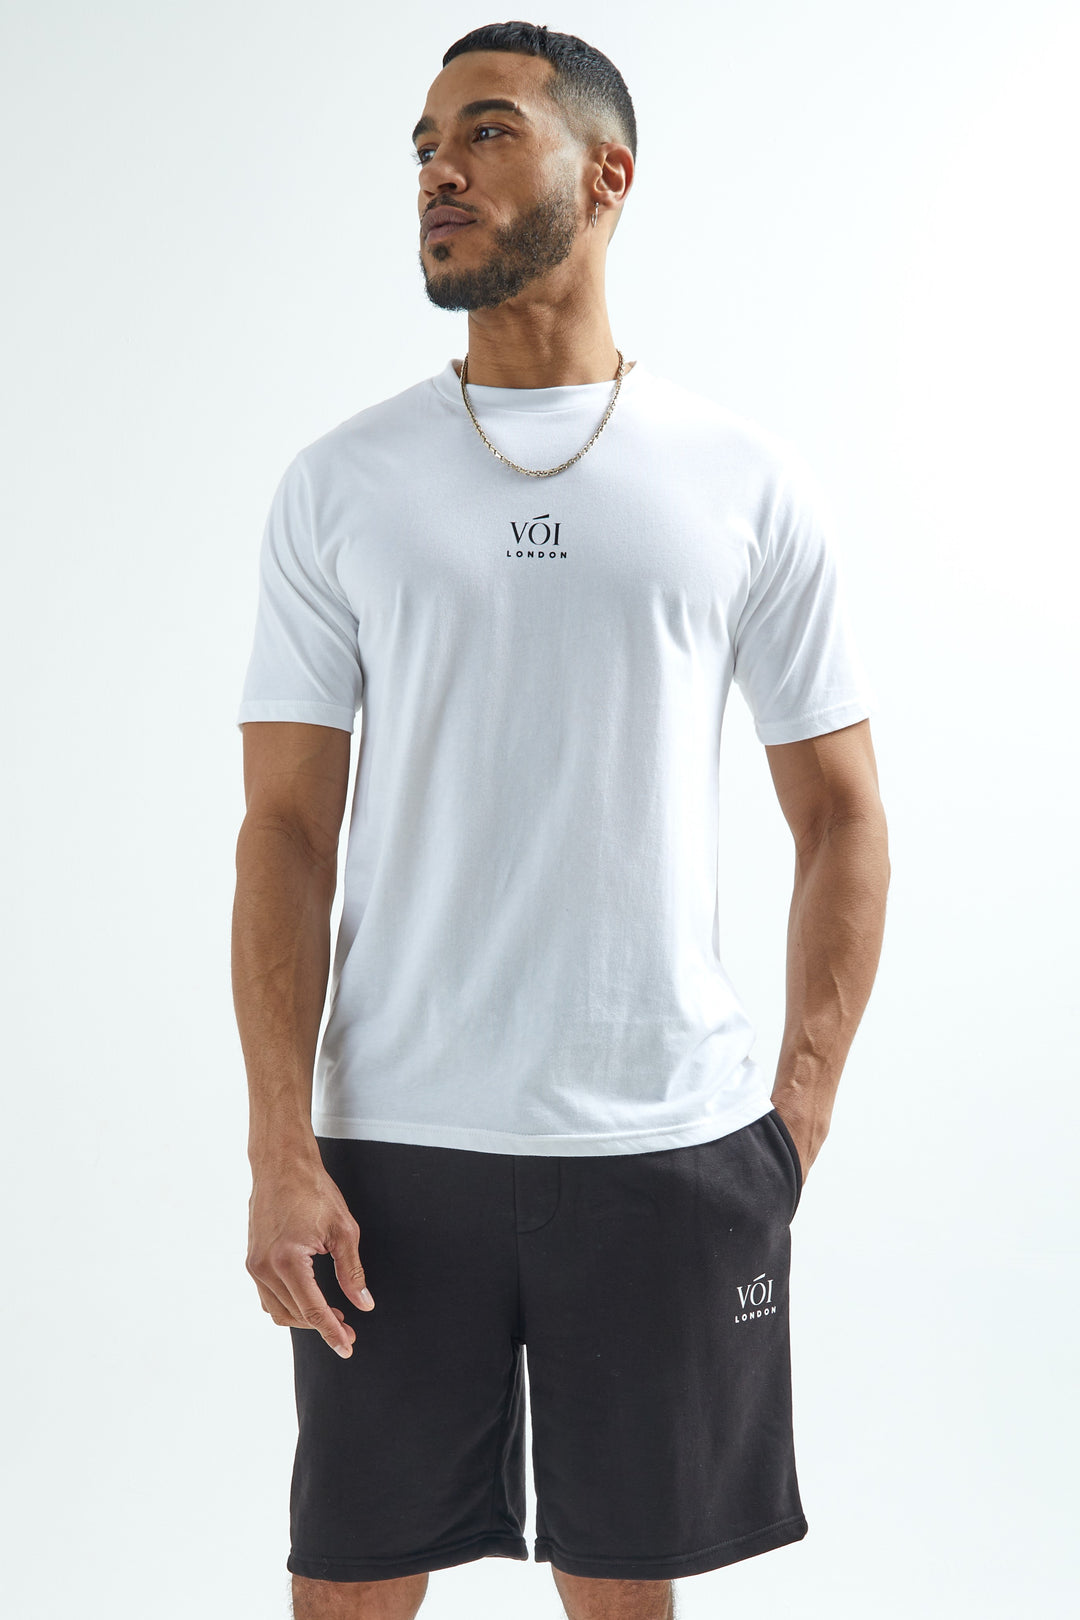 Broadwick T-Shirt & Shorts Set - White/Black